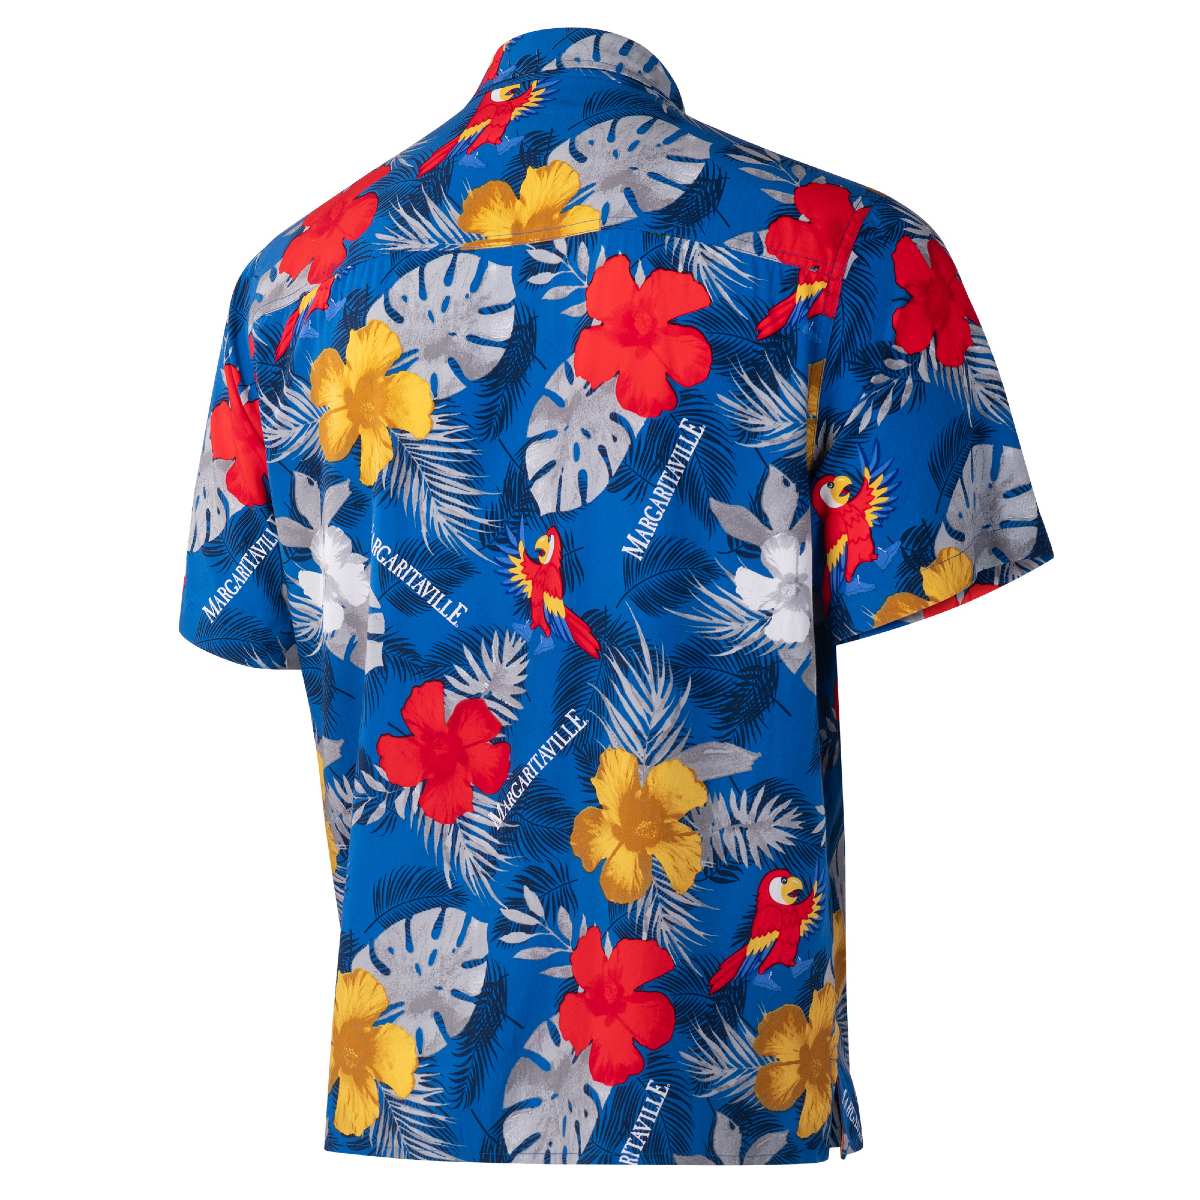 Men's Tampa Bay Lightning Margaritaville Island Life Floral Party Shirt